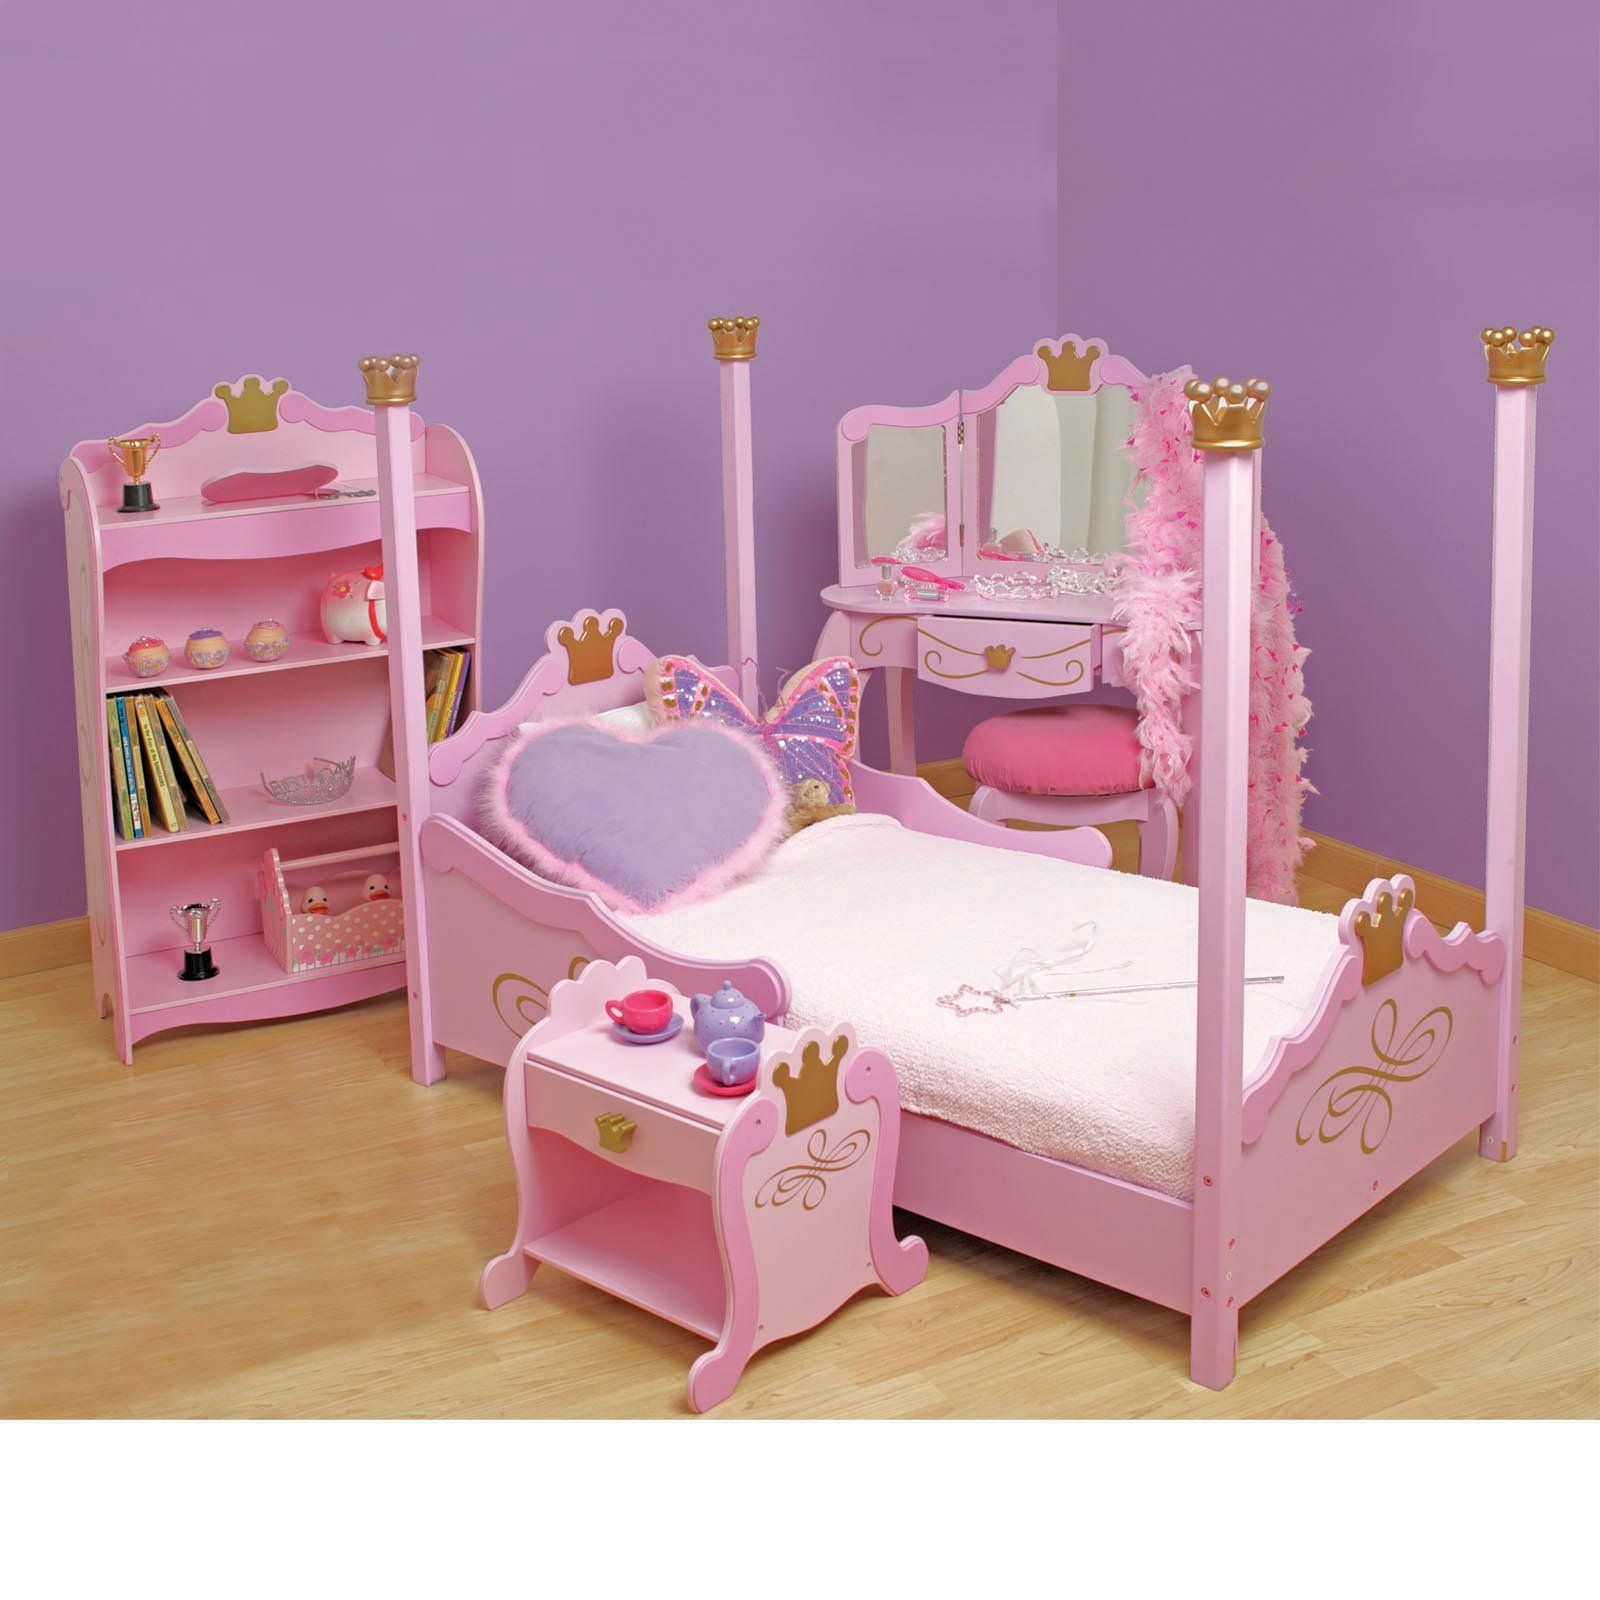 fun bedroom furniture for girls photo - 7